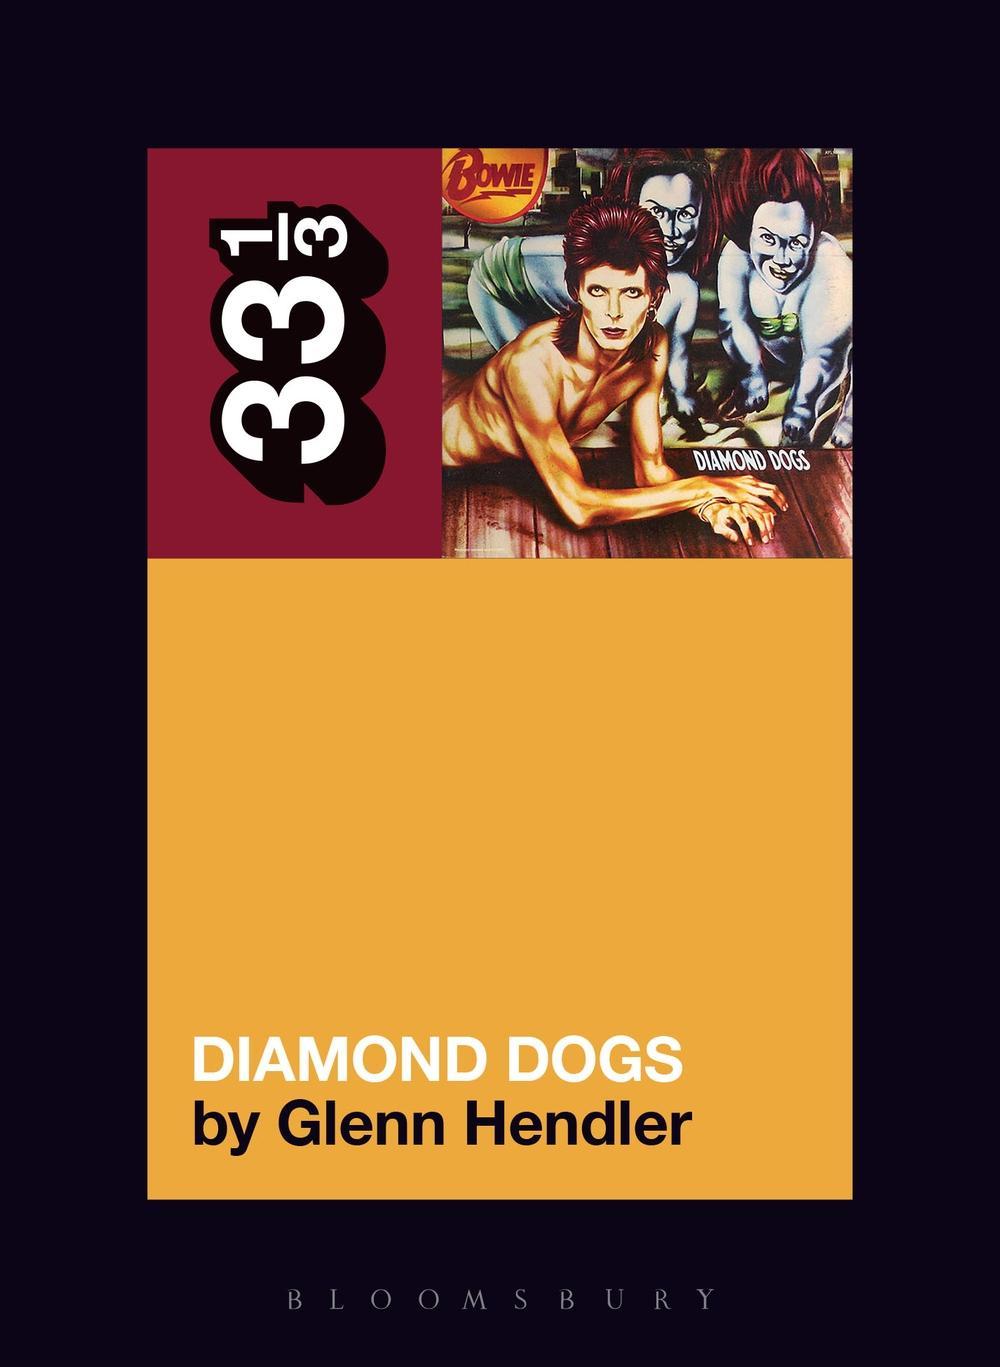 David Bowie's Diamond Dogs - Glenn Hendler